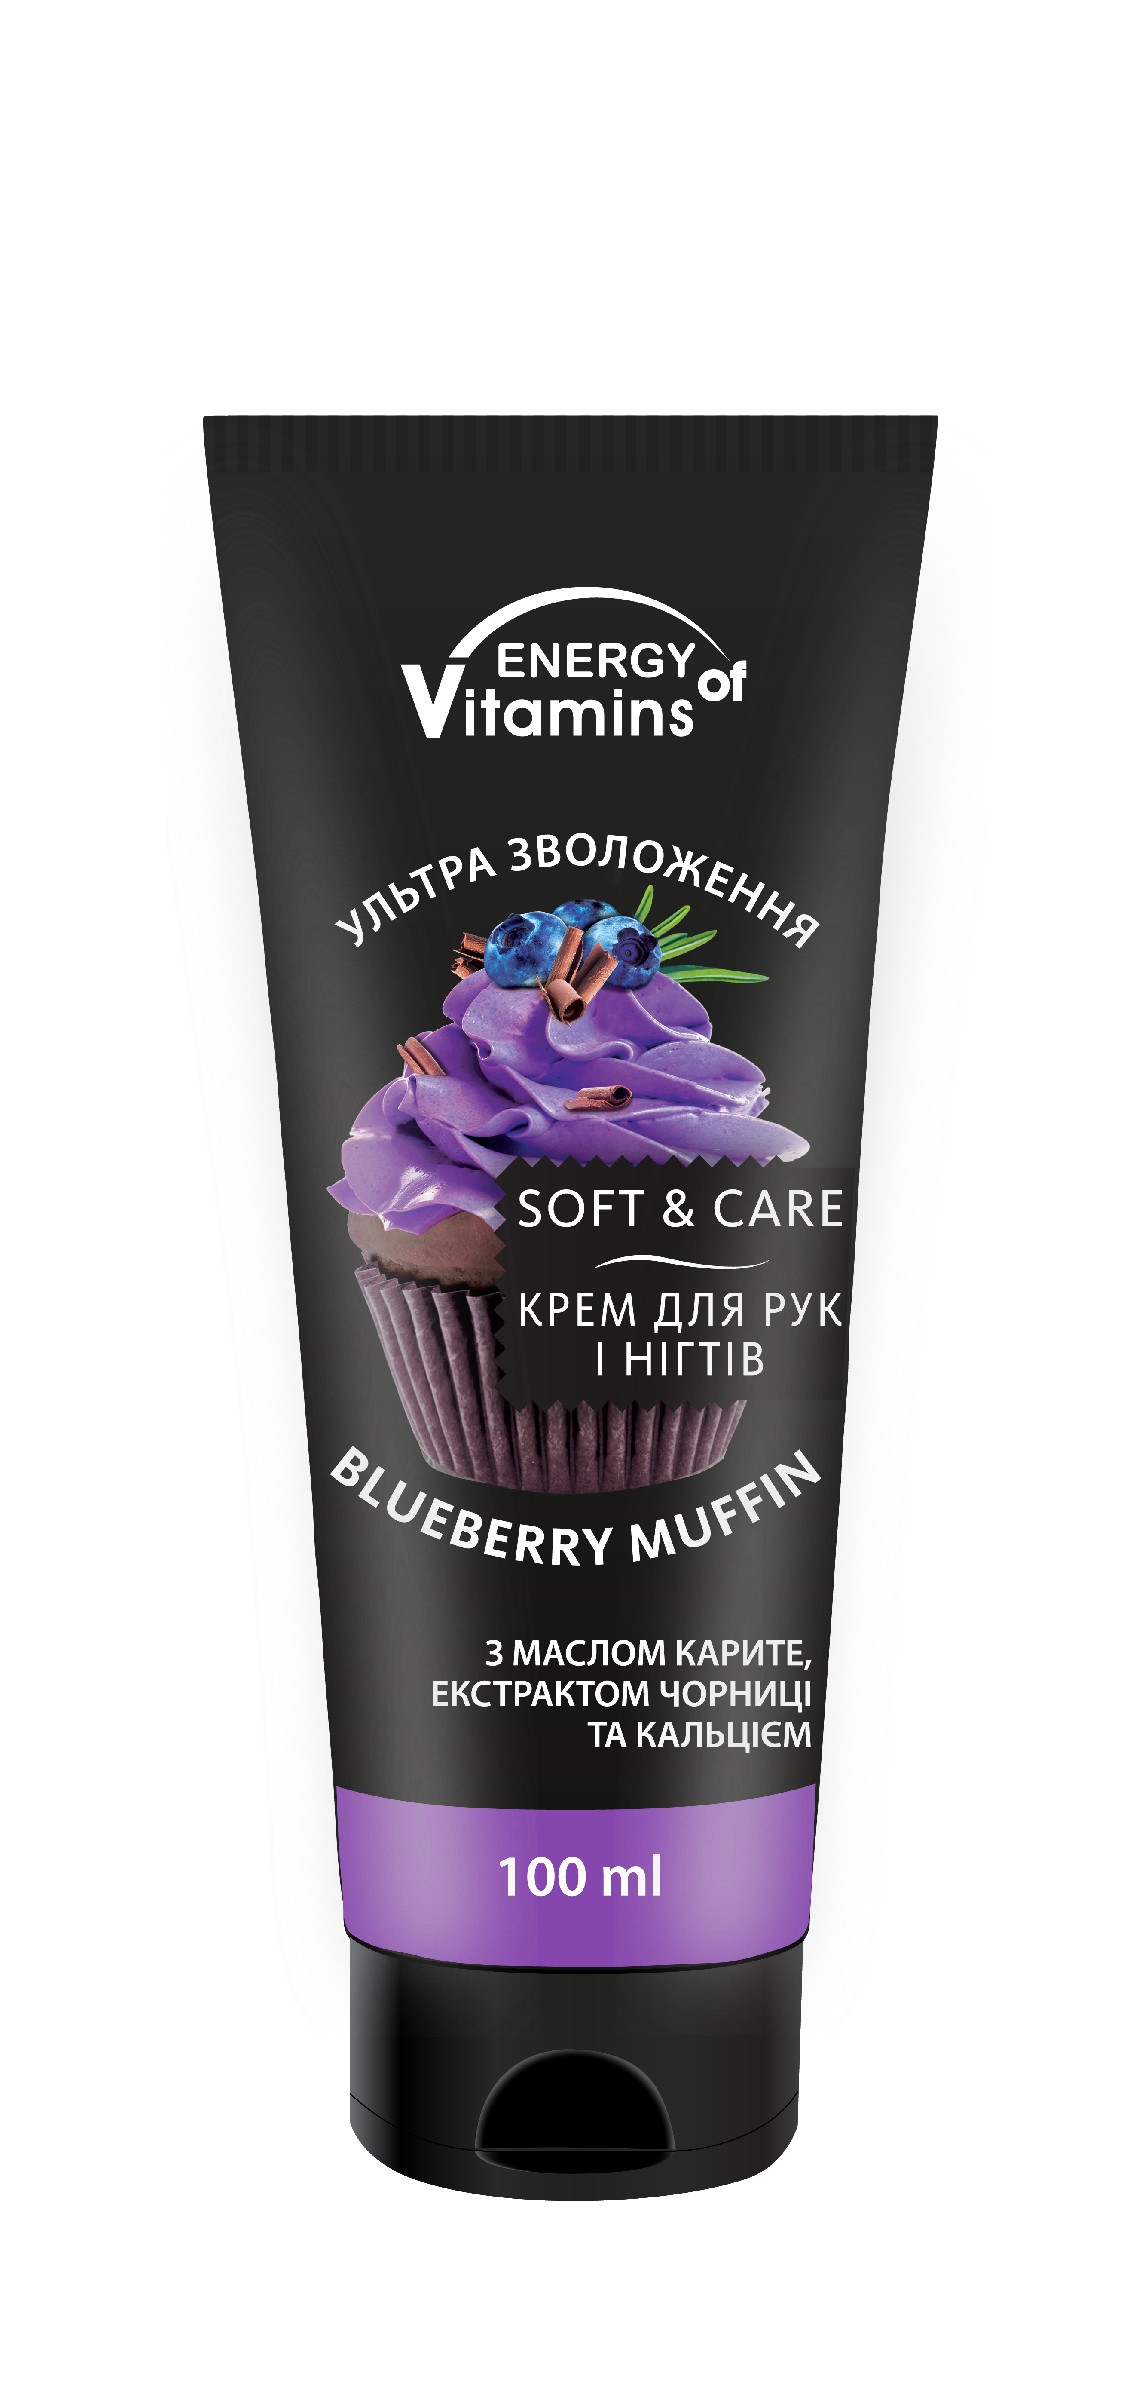 ENERGY OF VITAMINS Krem do rąk Blueberry Muffin 100ml